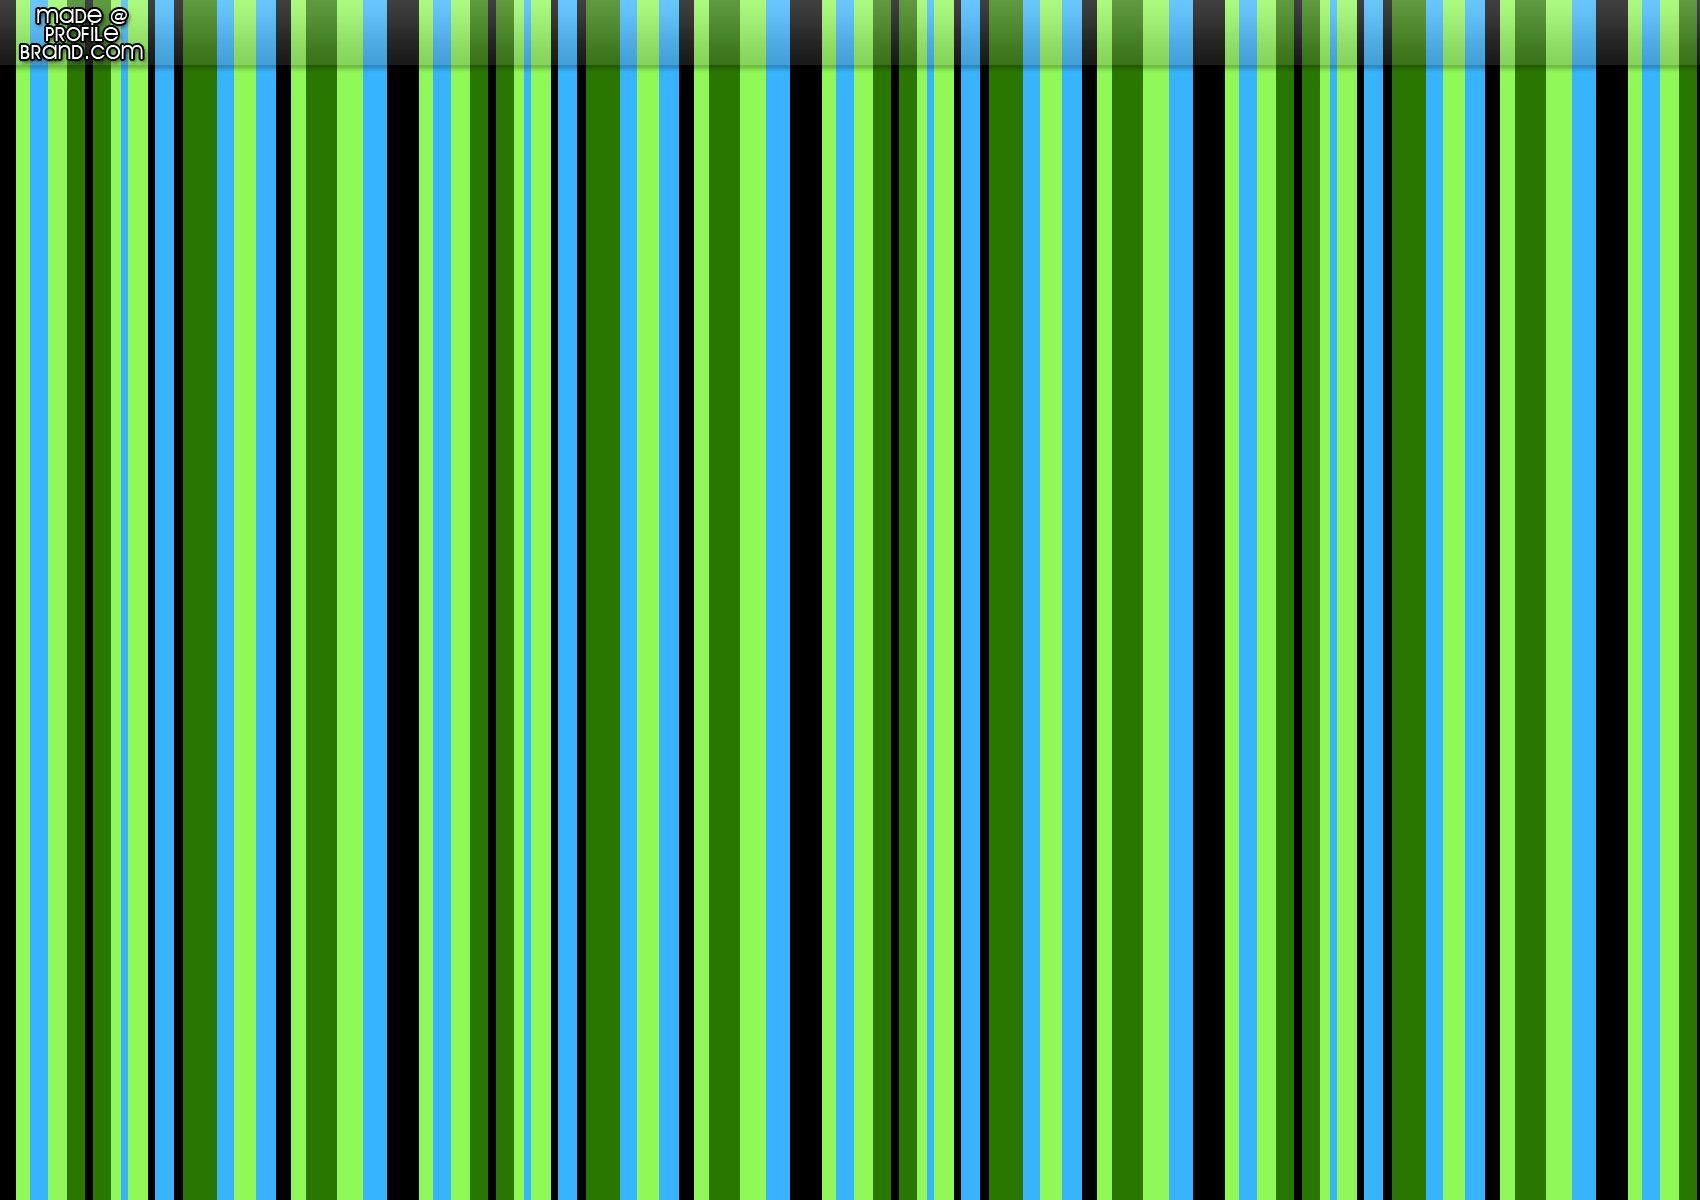 Pretty Green Stripes 307236 Image HD Wallpaper. Wallfoy.com